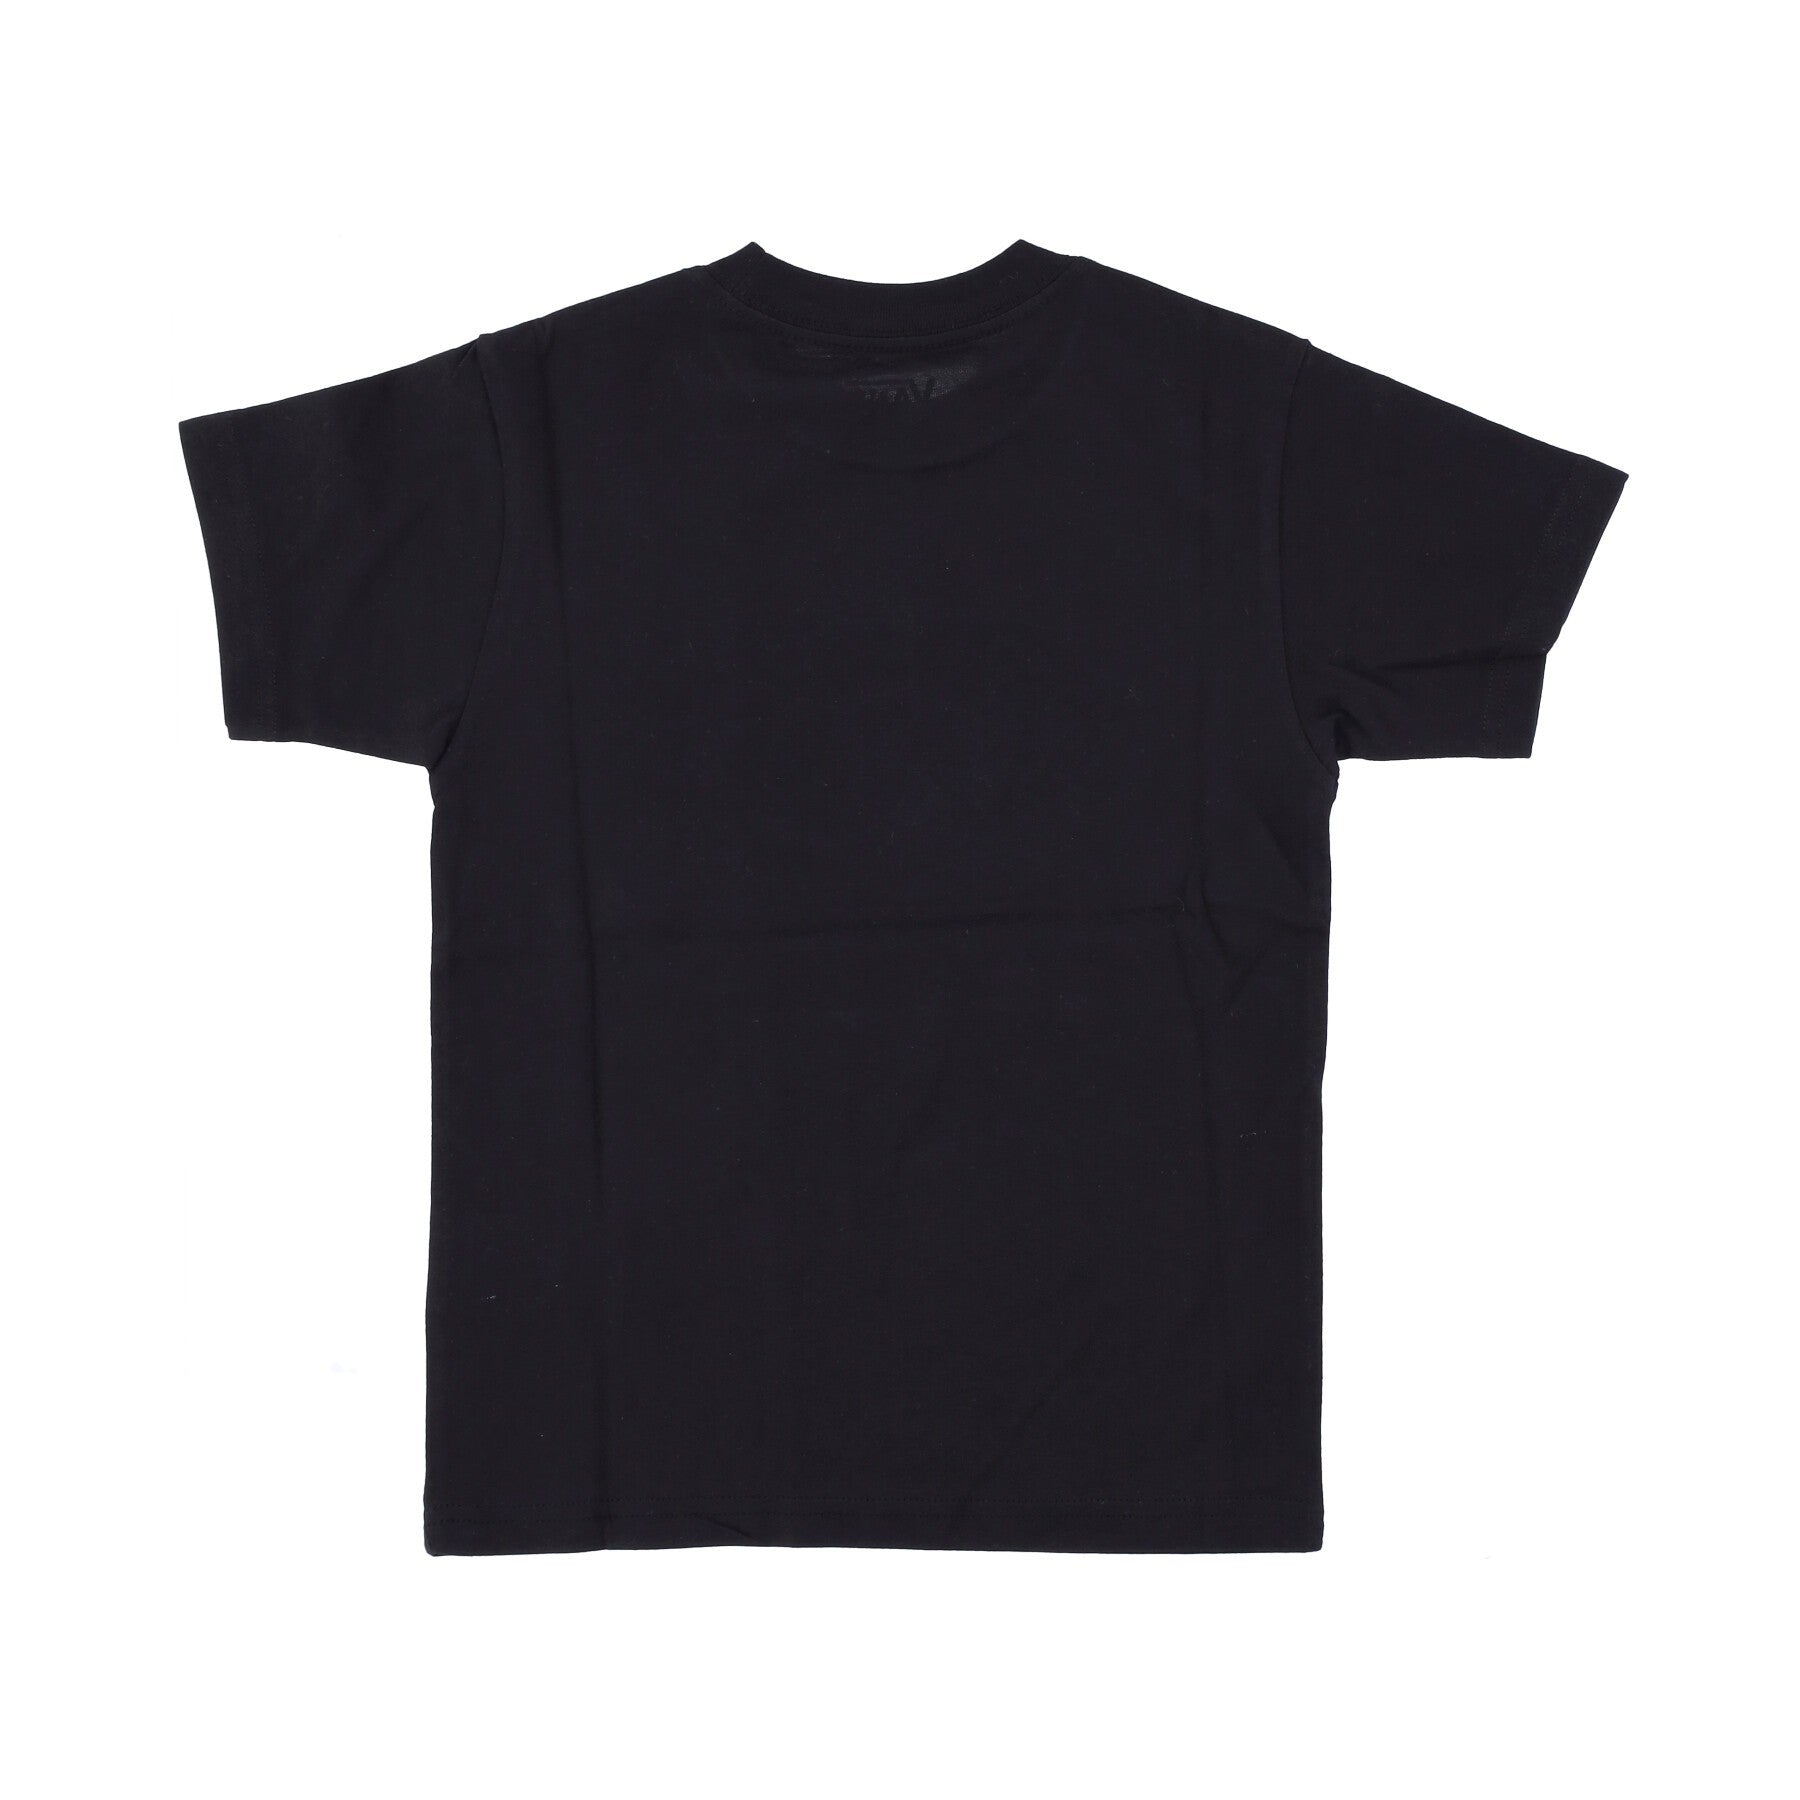 Children's T-shirt Print Box Black/shark Fin